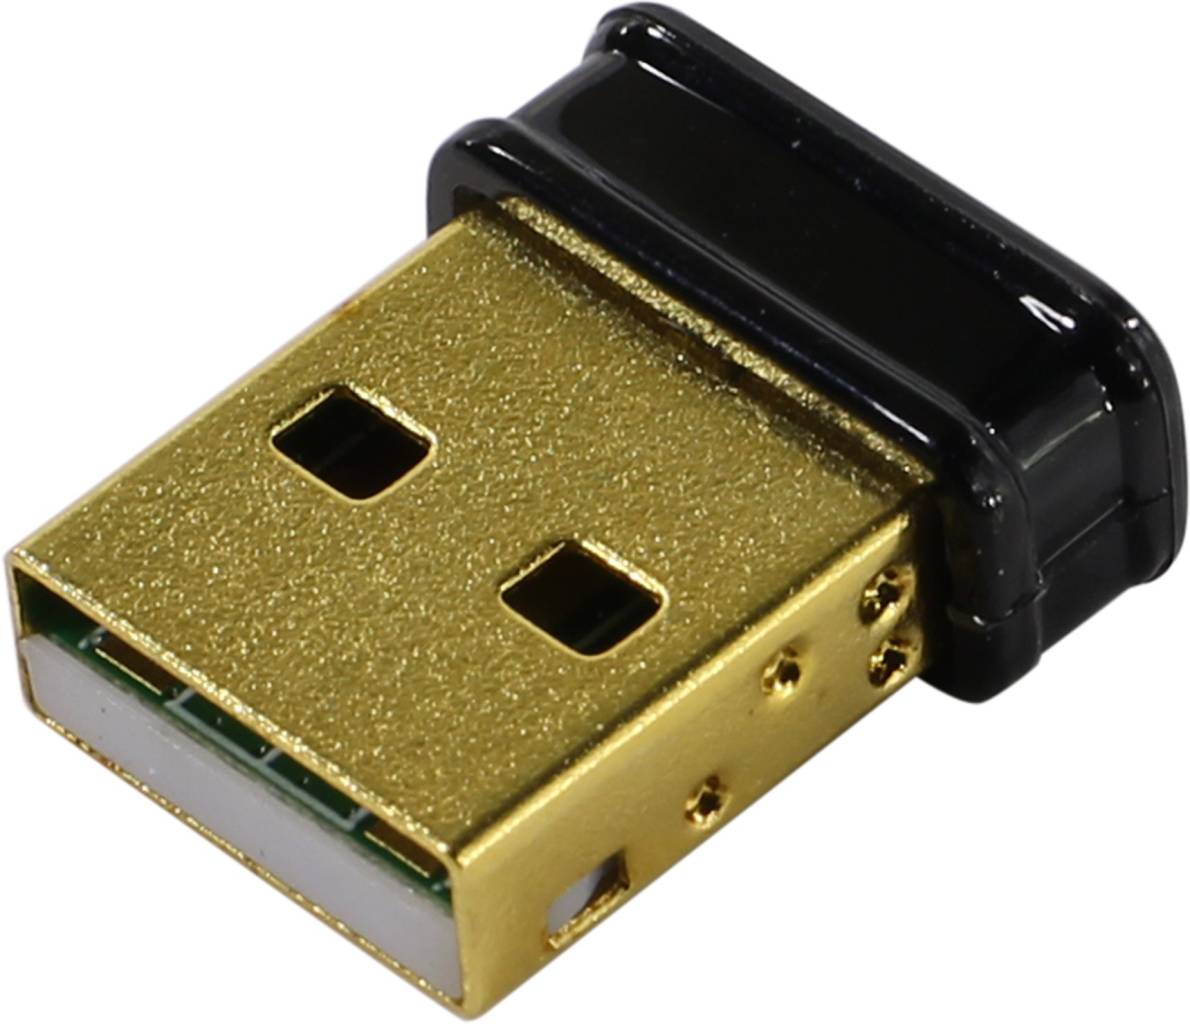    USB2.0 Edimax [EW-7811UN] (802.11b/g/n, 150Mbps)